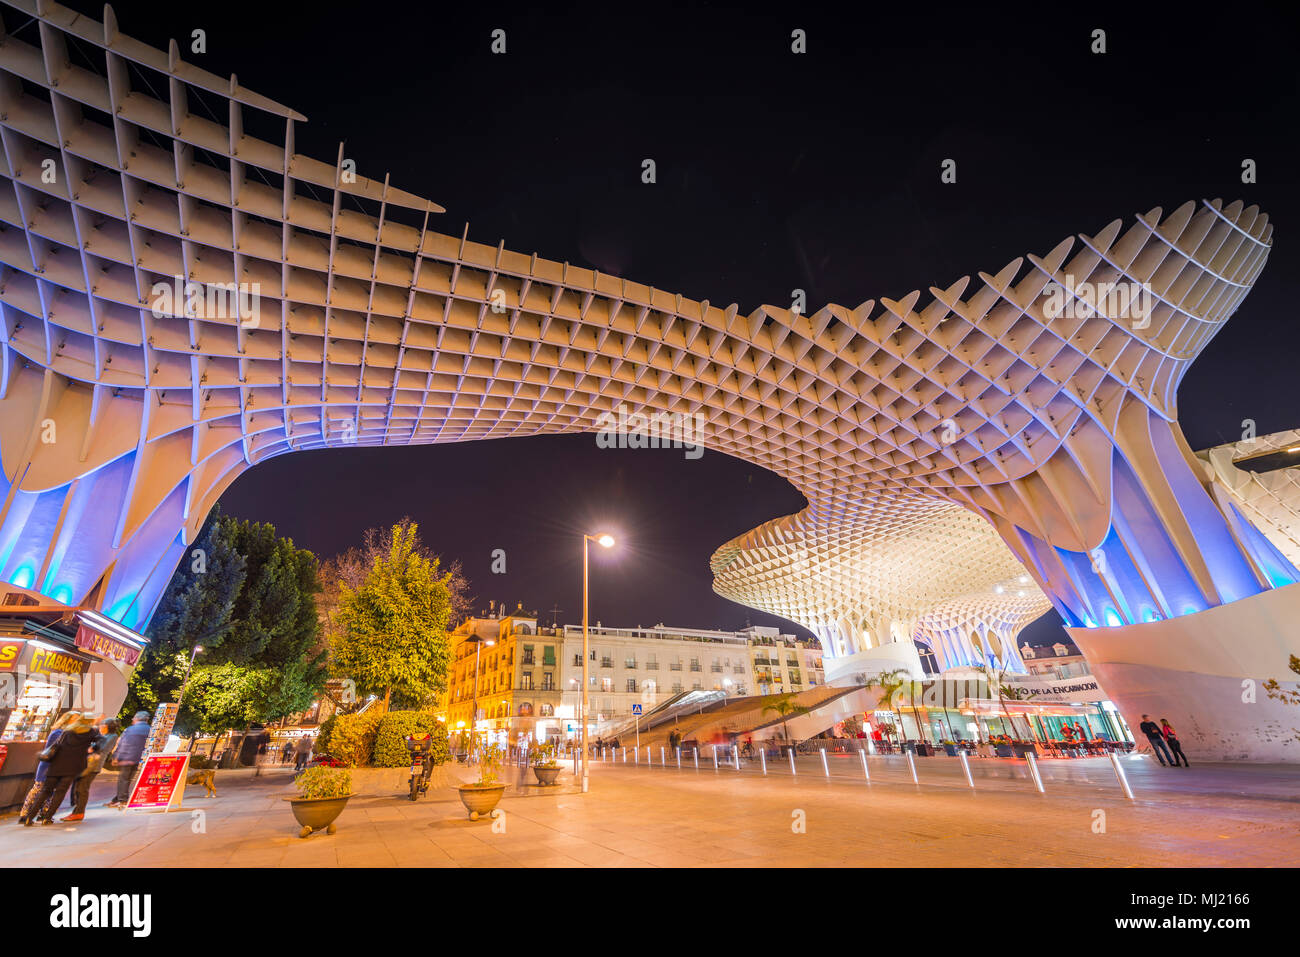 Moderne Architektur, Holz- struktur Metropol Parasol, bei Nacht beleuchtet, Plaza de la Encarnacion in Sevilla, Andalusien, Spanien Stockfoto